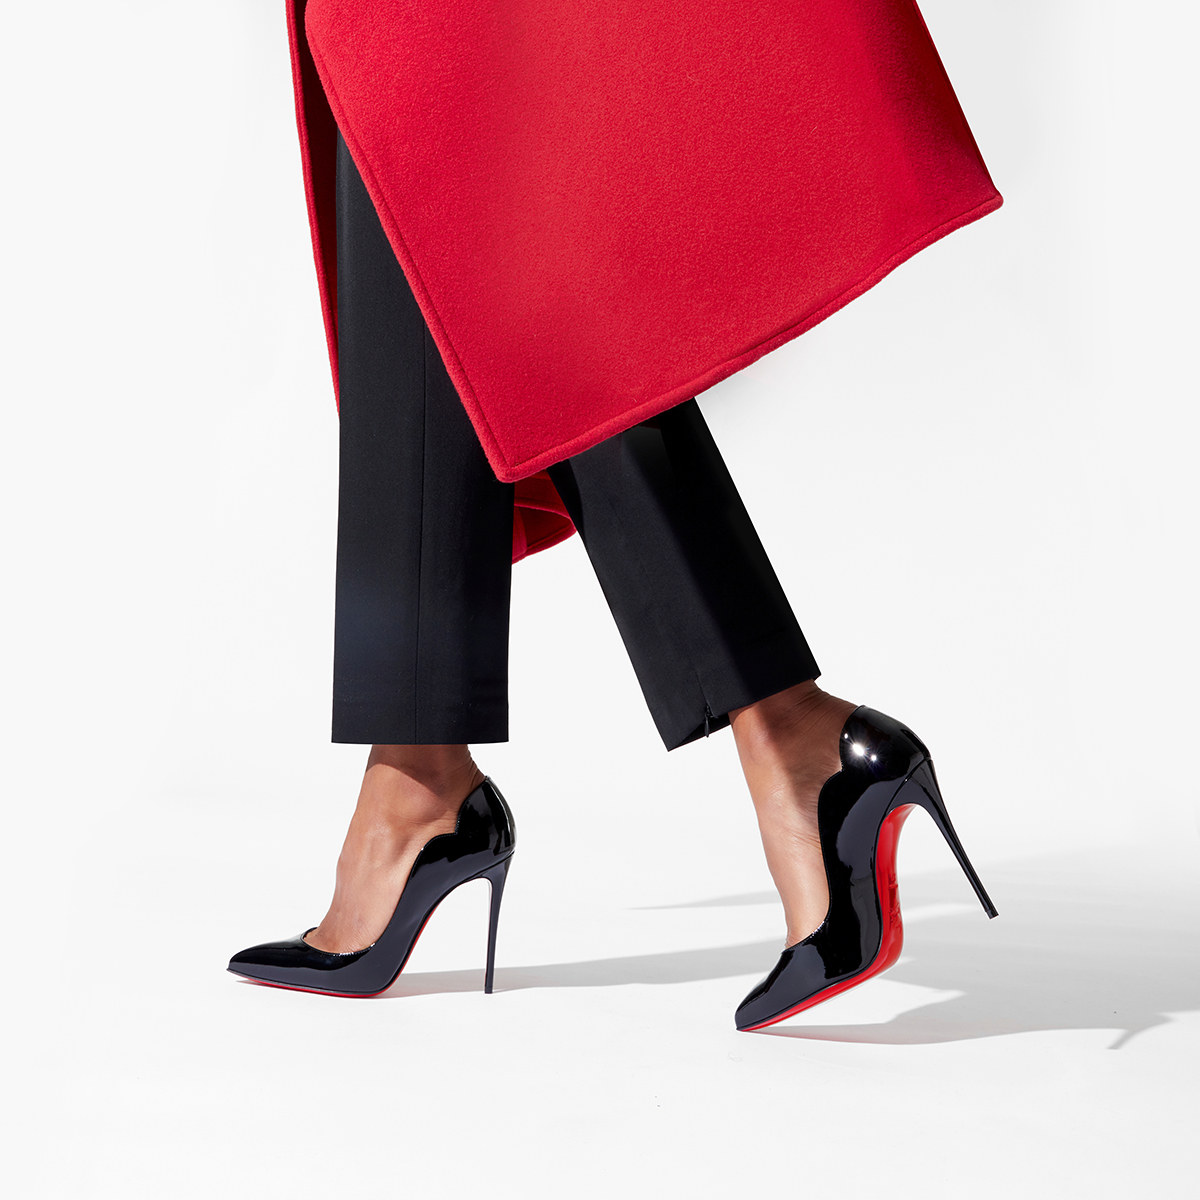 Women's High Heel Red Bottom Shoes Size 6 M Christian Louboutin Black  160 Mesh